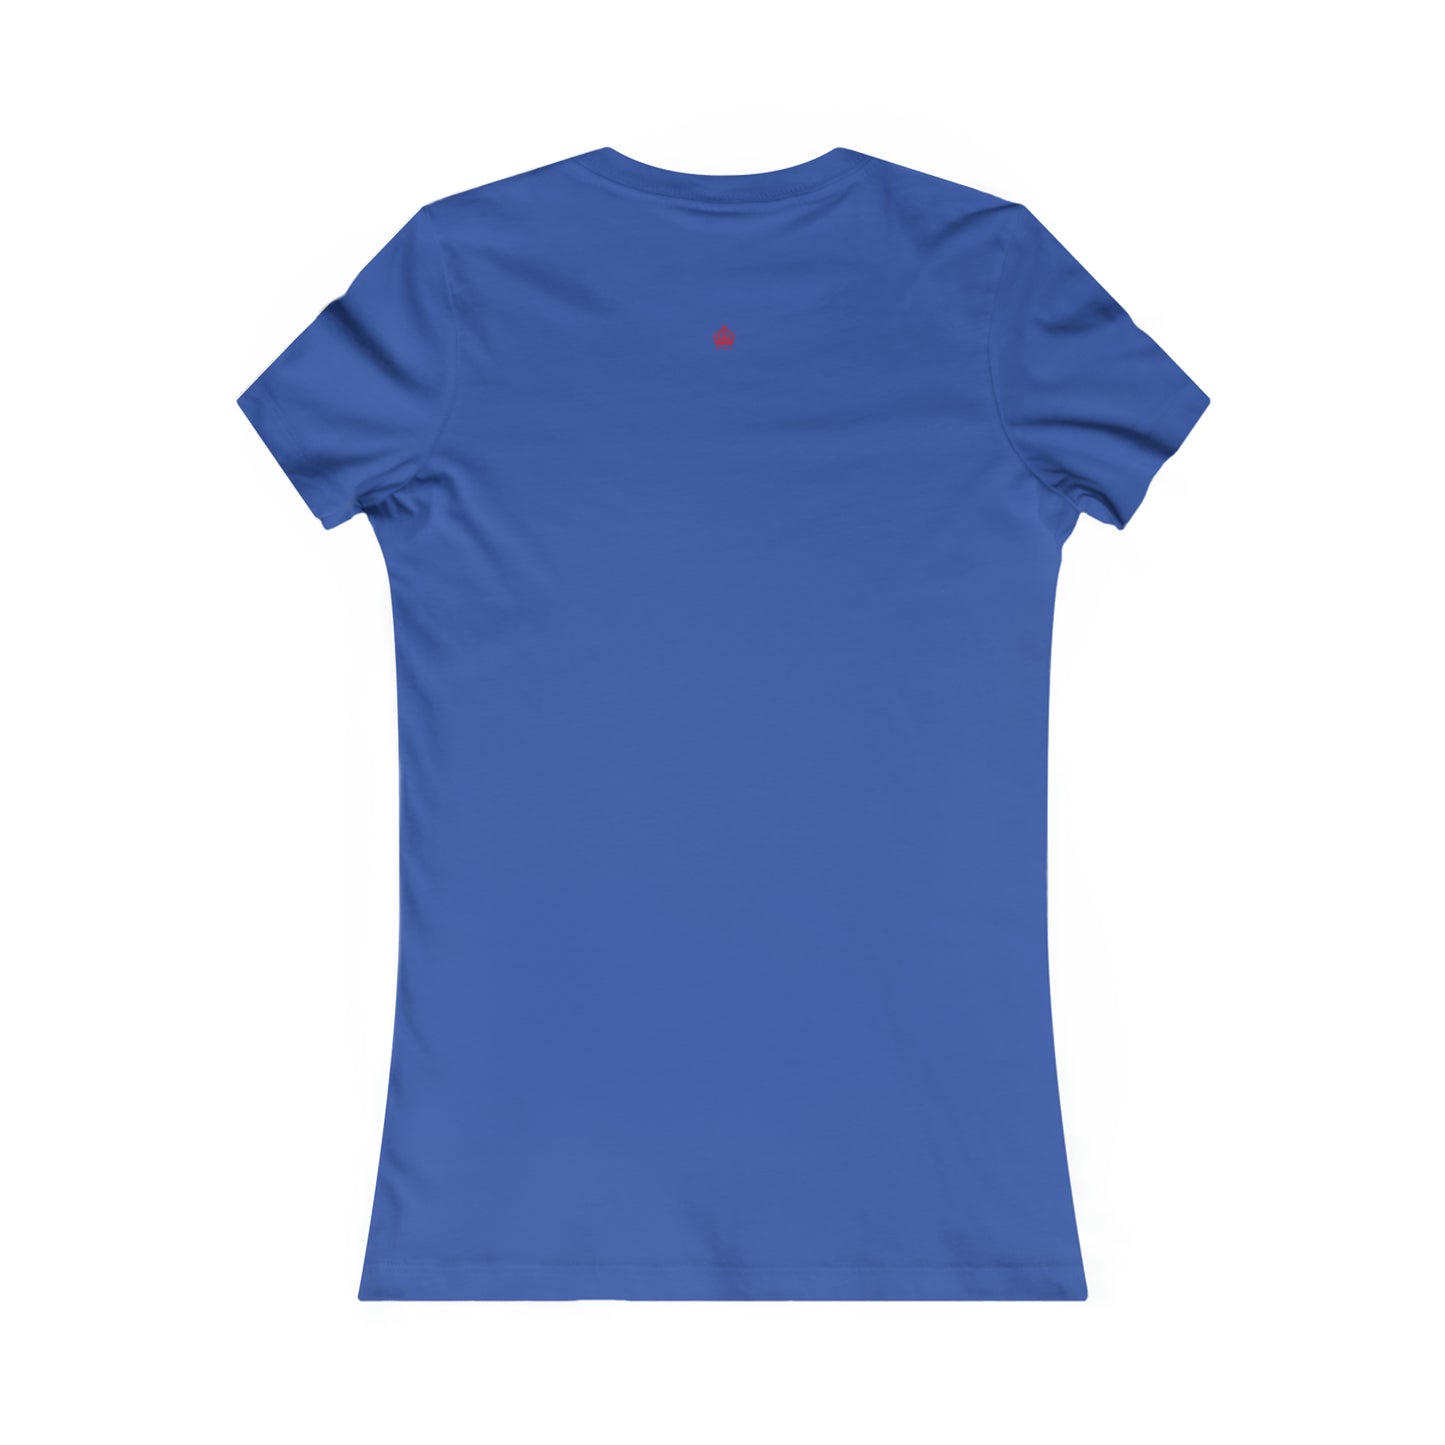 True Royal Blue - Women's Favorite T Shirt - Royal Blue Royal T